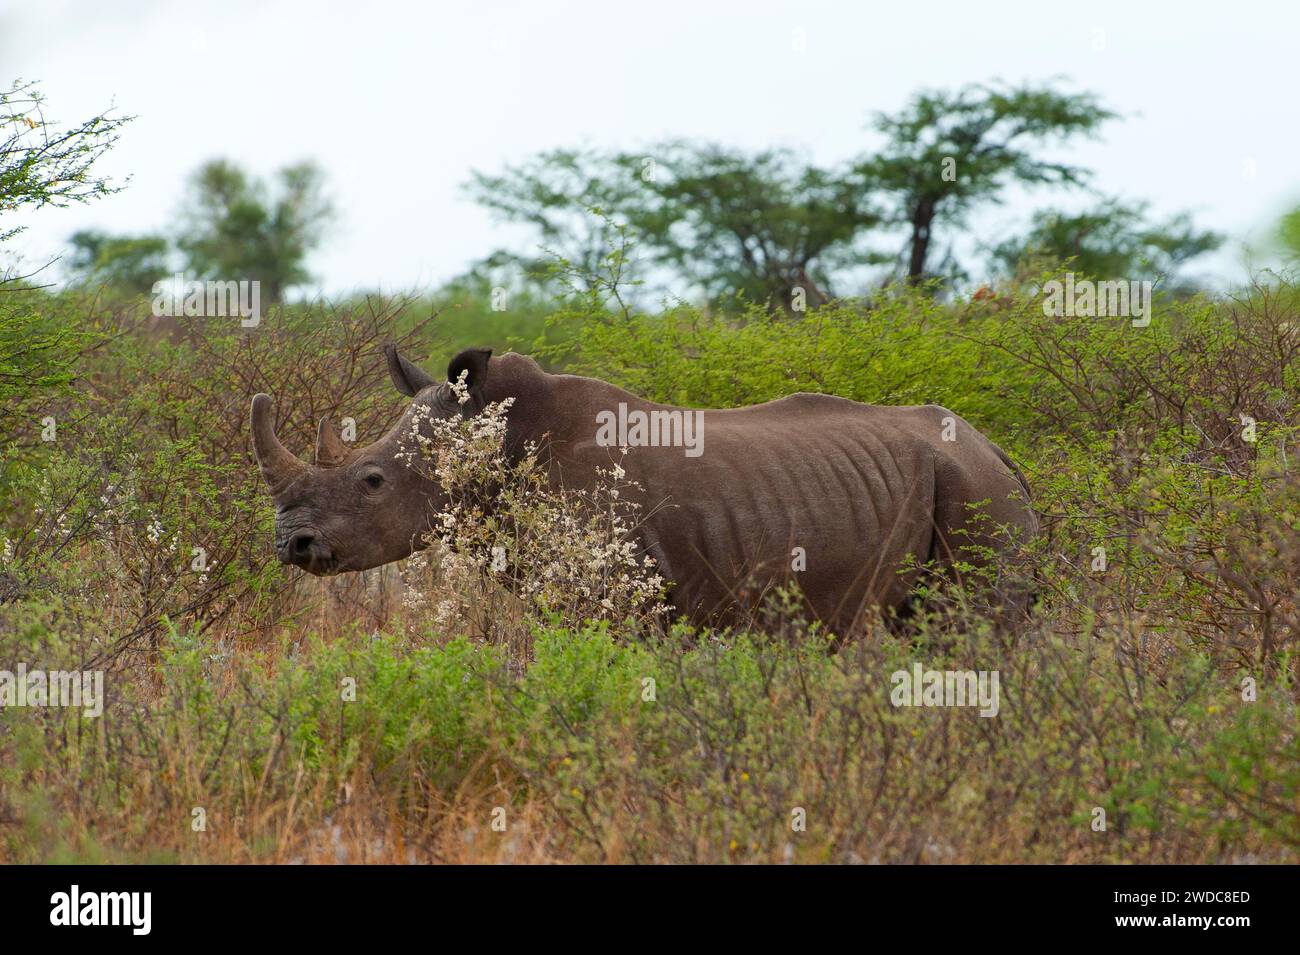 Rinoceronte bianco (Ceratotherium simum), rinoceronte, rinoceronte, vita libera, natura selvaggia, safari, viaggio, avventura, Namibia Foto Stock